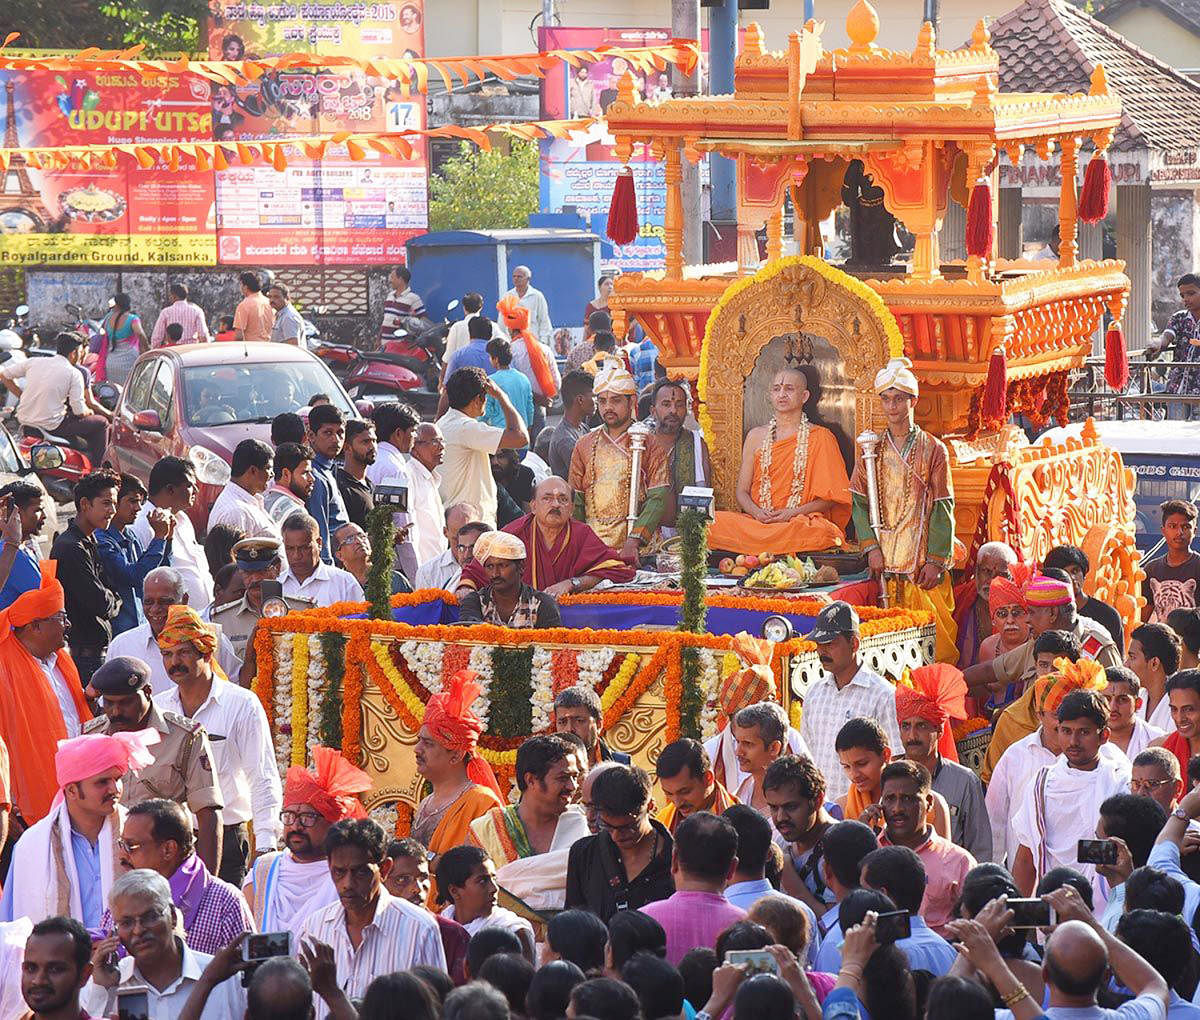 Devotees accord a grand welcome to Palimaru Mutt seer Sri Vidyadheesha Theertha Swami when he arrived at Udupi (Pura Pravesha) on Wednesday.